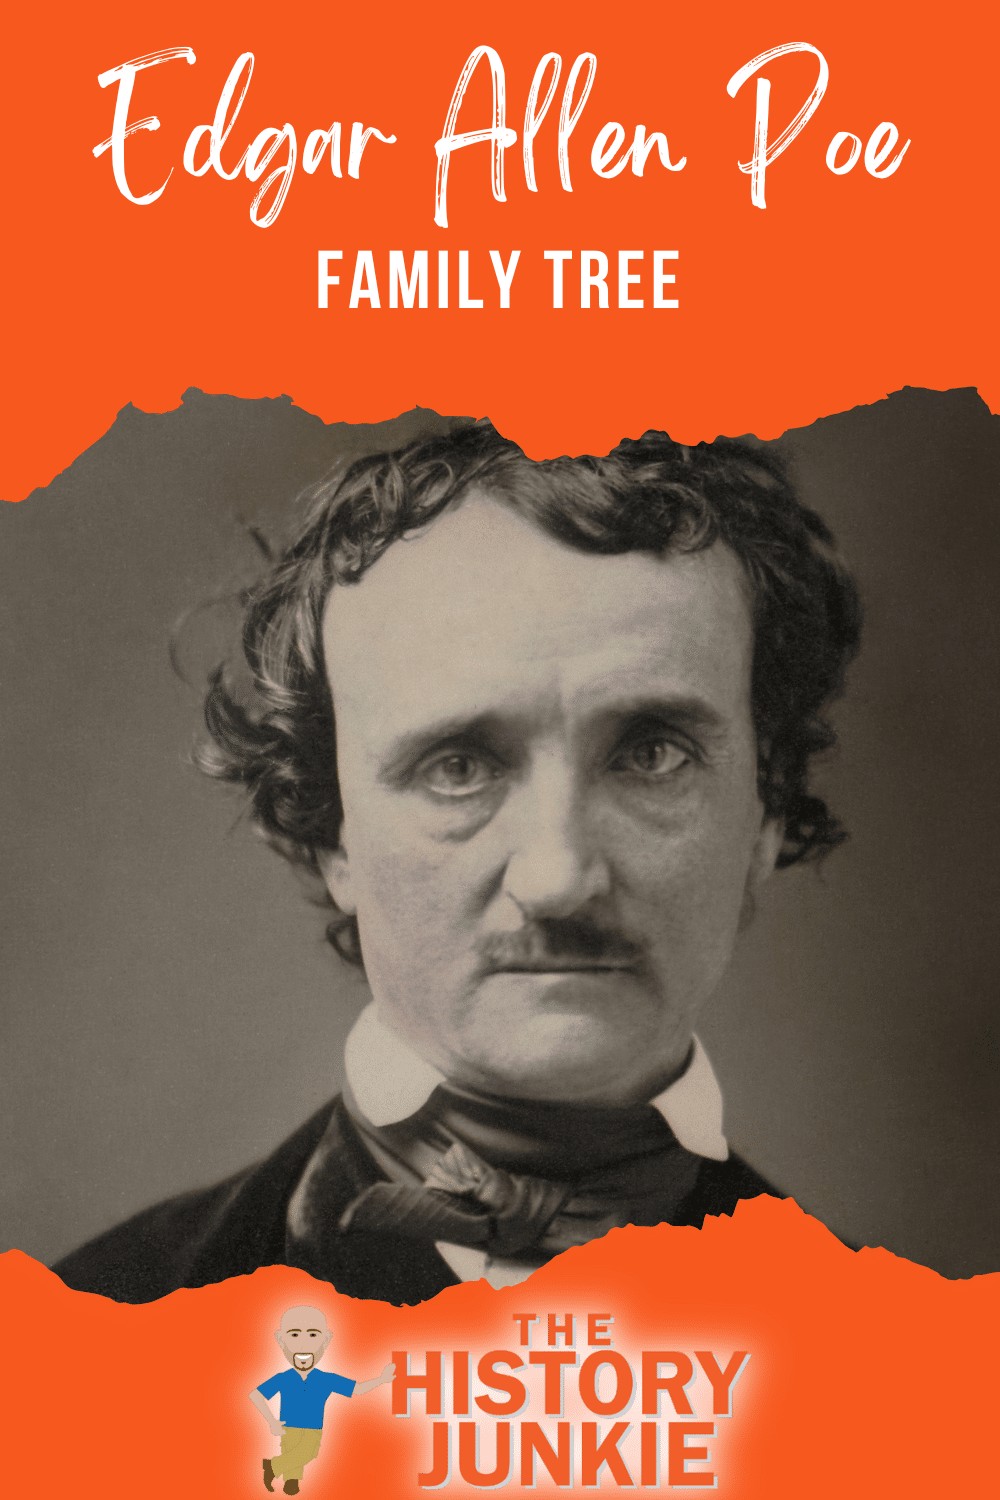 Edgar Allan Poe  Biography, Poems, Short Stories, & Facts